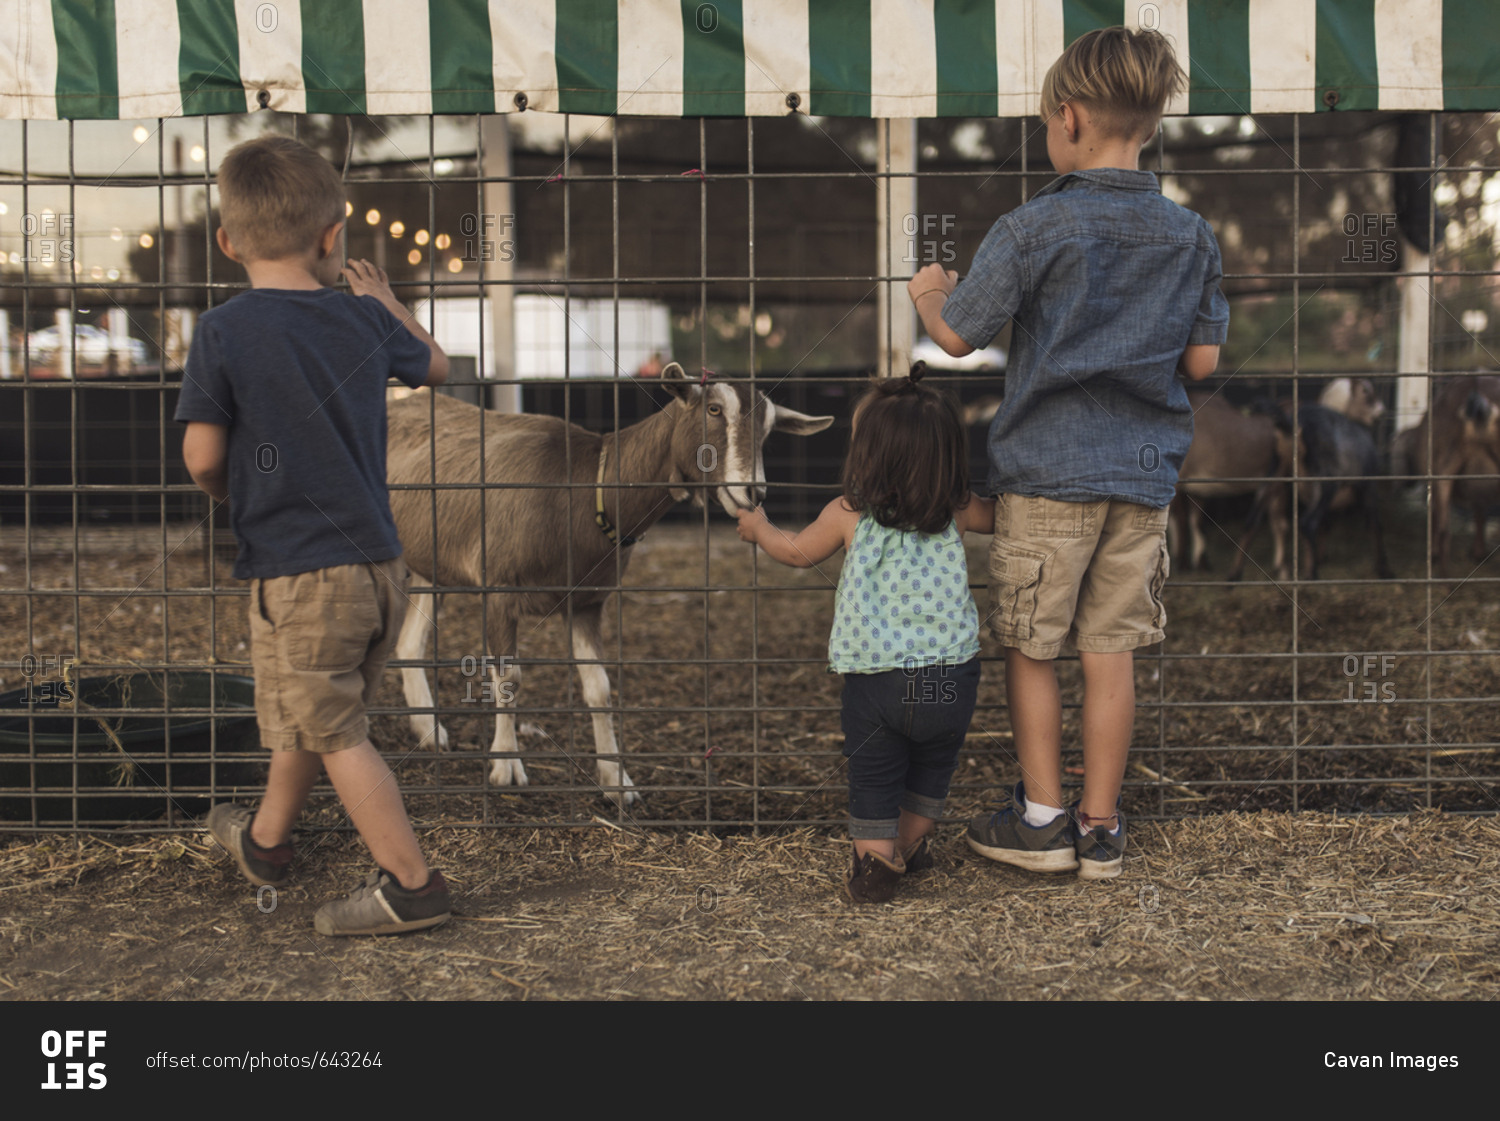 Rear view of siblings looking at goat in animal pen